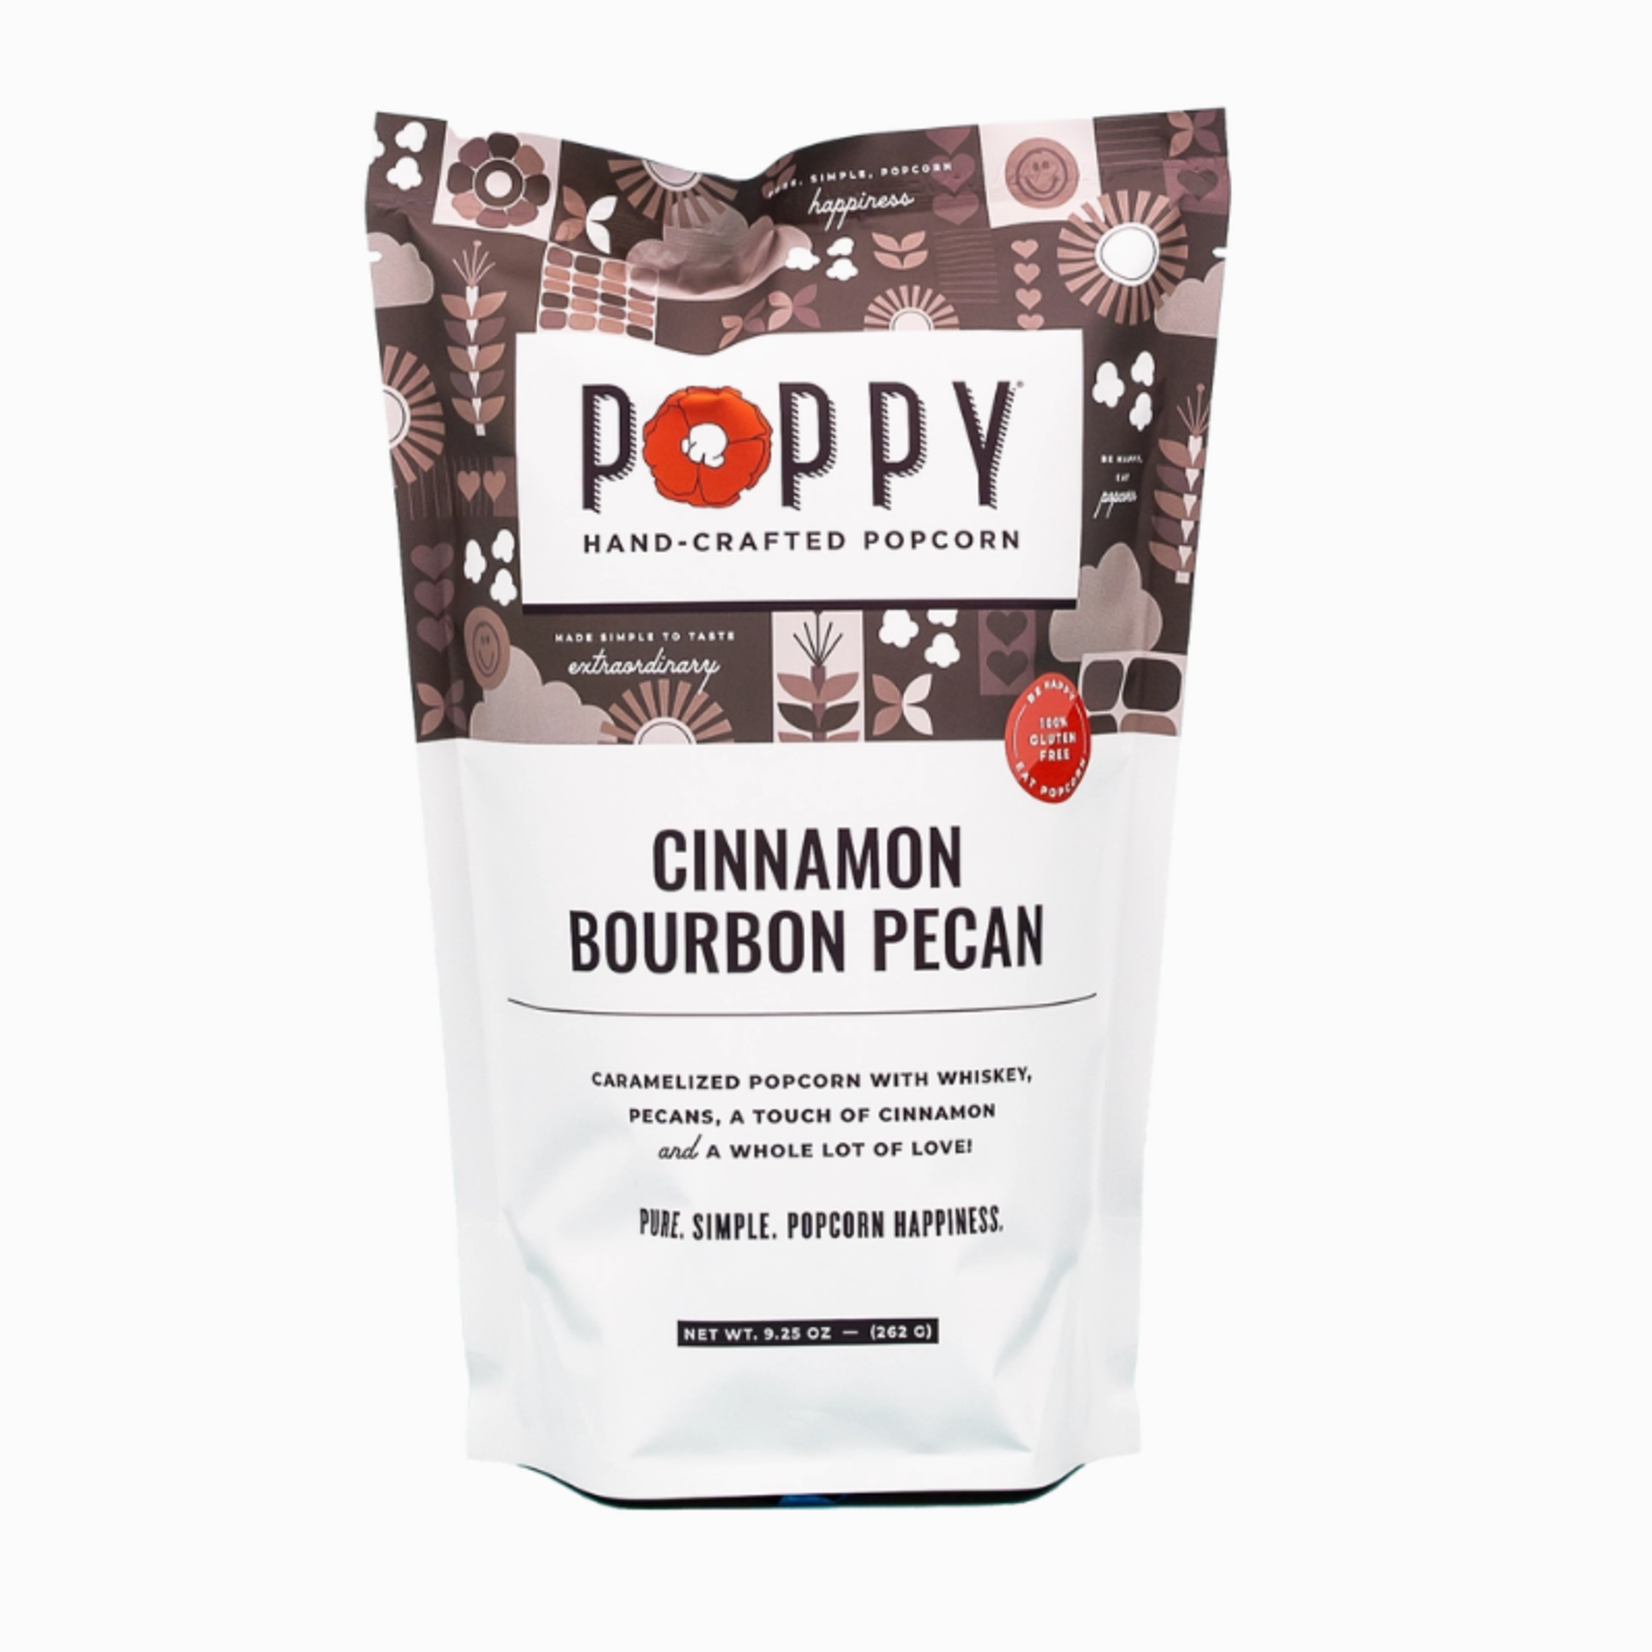 Poppy Handcrafted Popcorn Cinnamon Bourbon Pecan